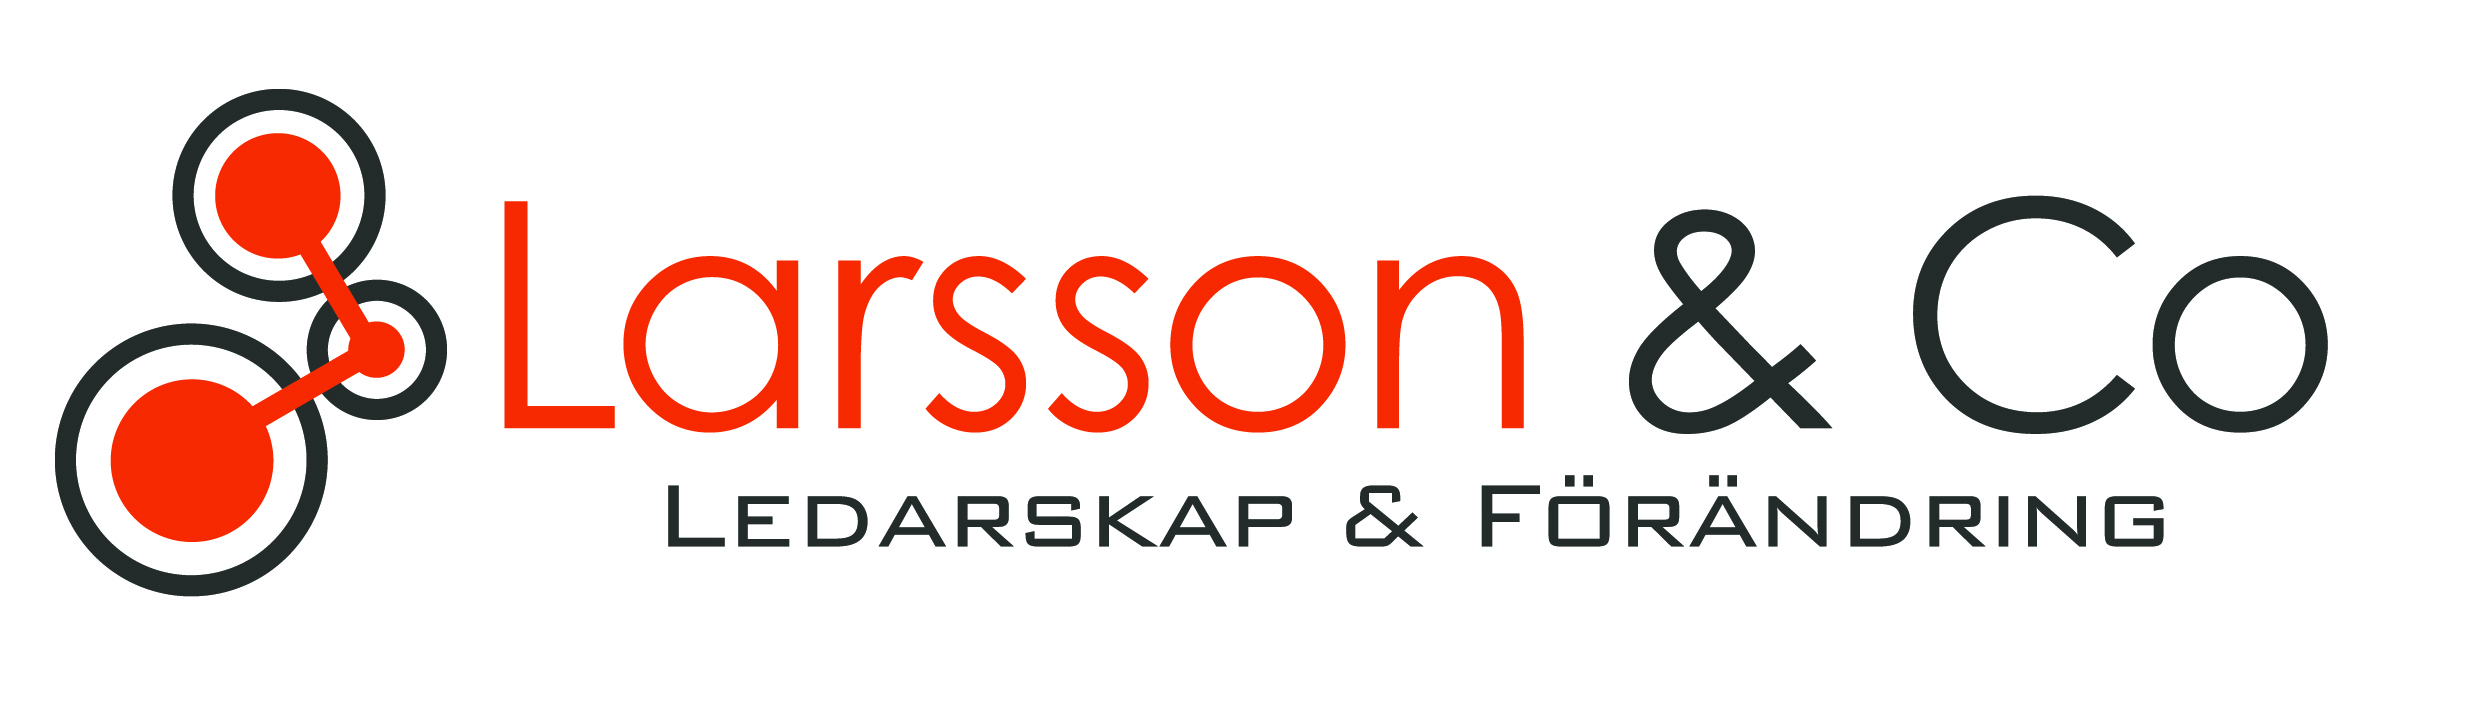 Larsson & Co